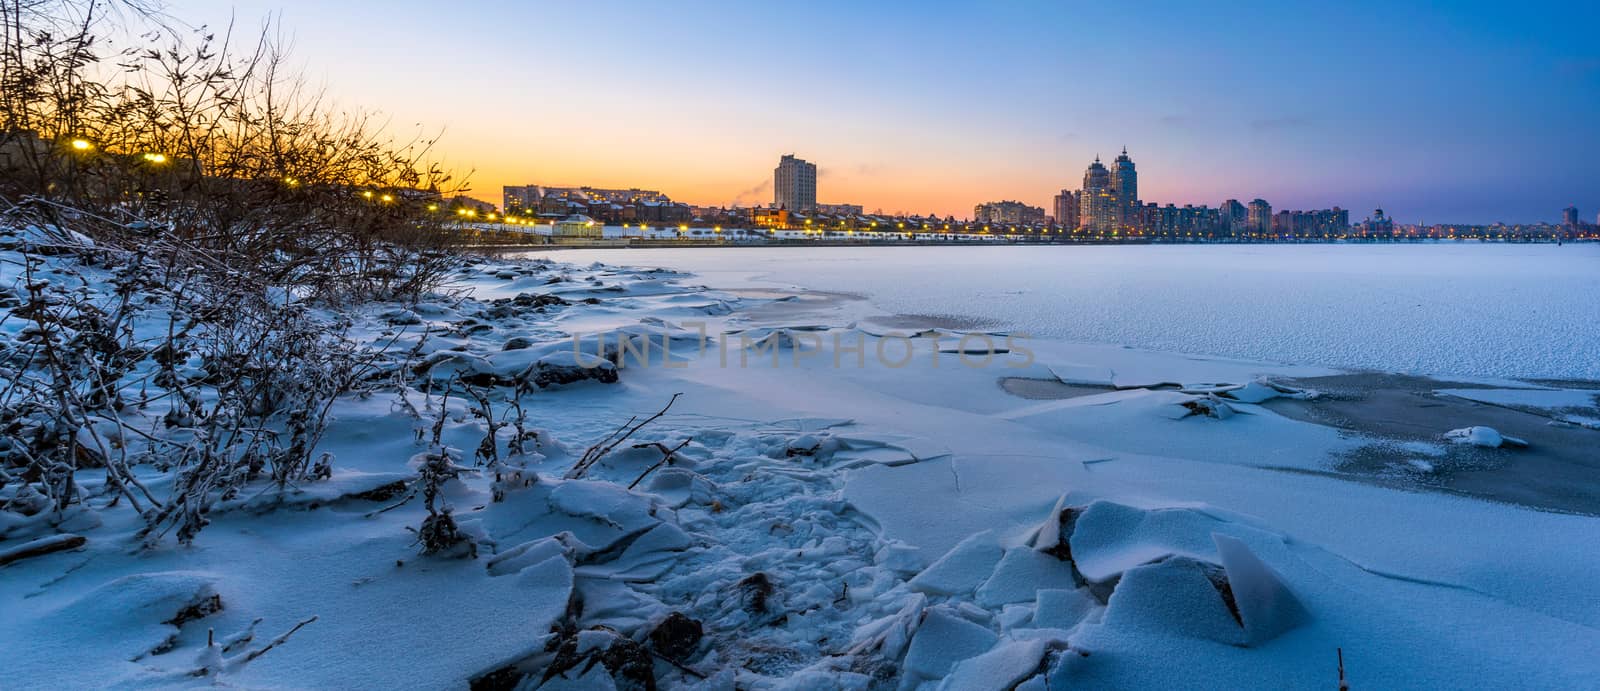 Winter Night Cityscape close to the Dnieper River in Kiev by MaxalTamor